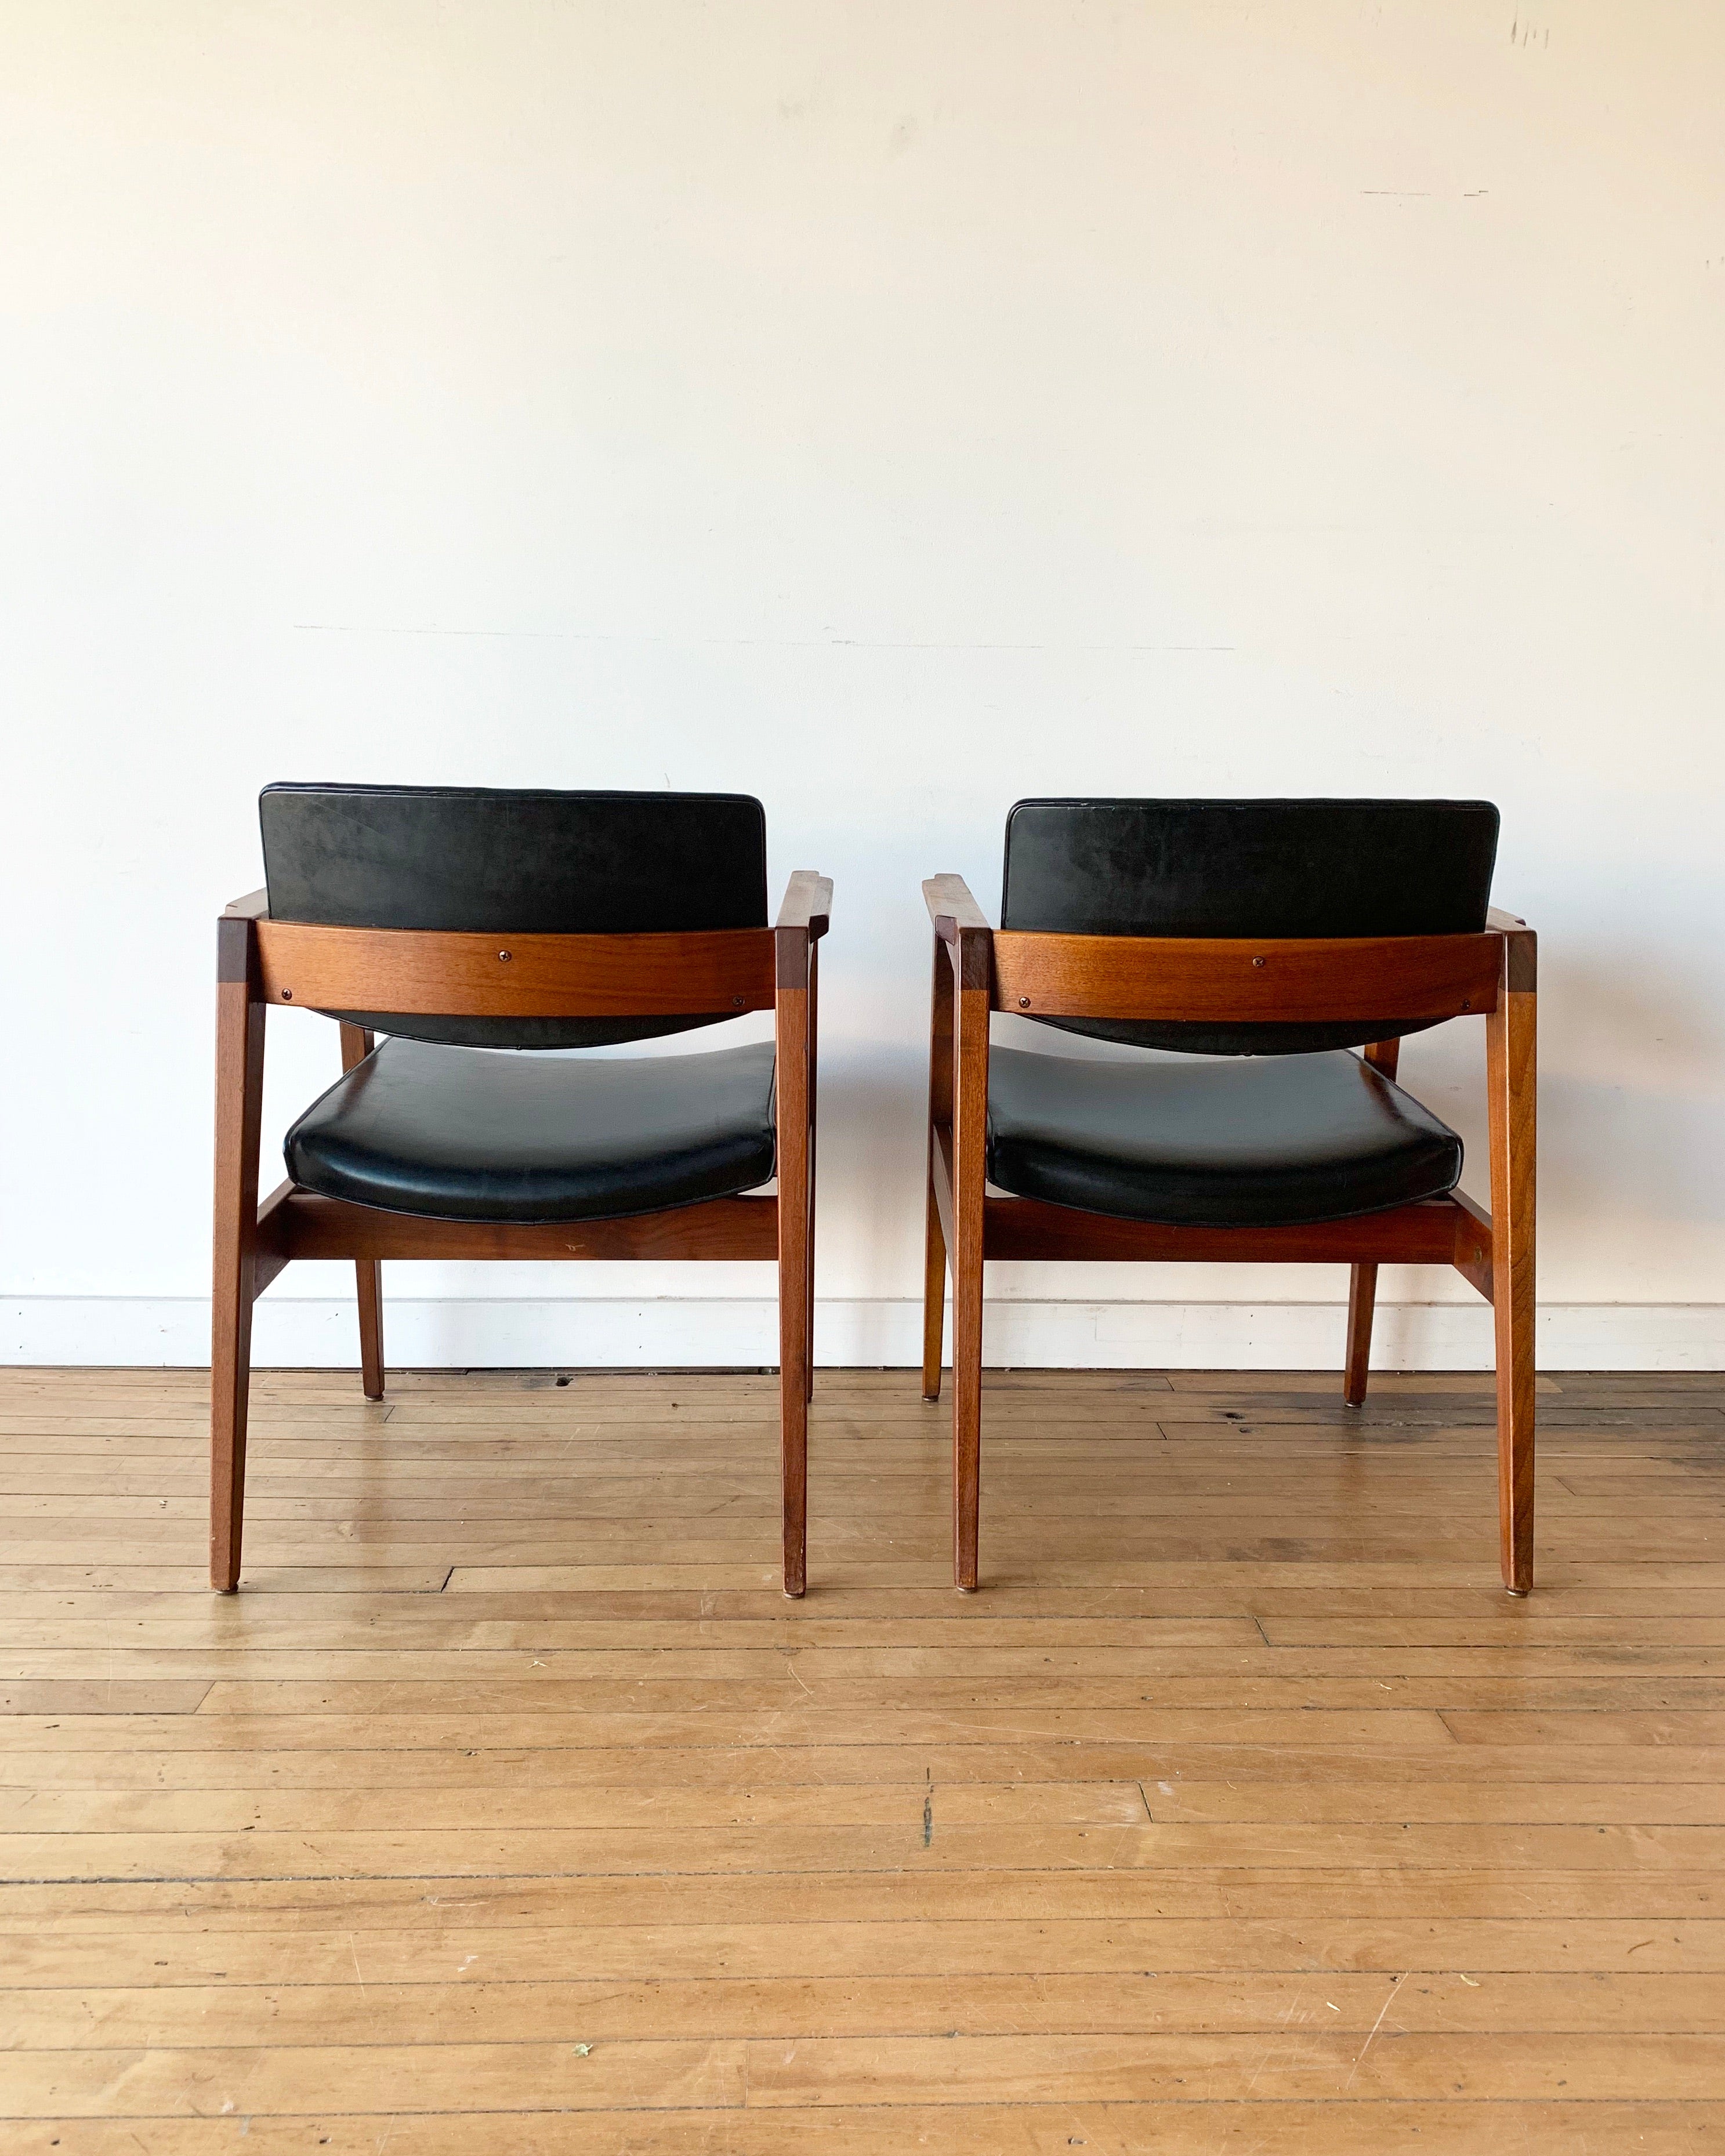 Pair of Mid-Century chairs by Gunlocke